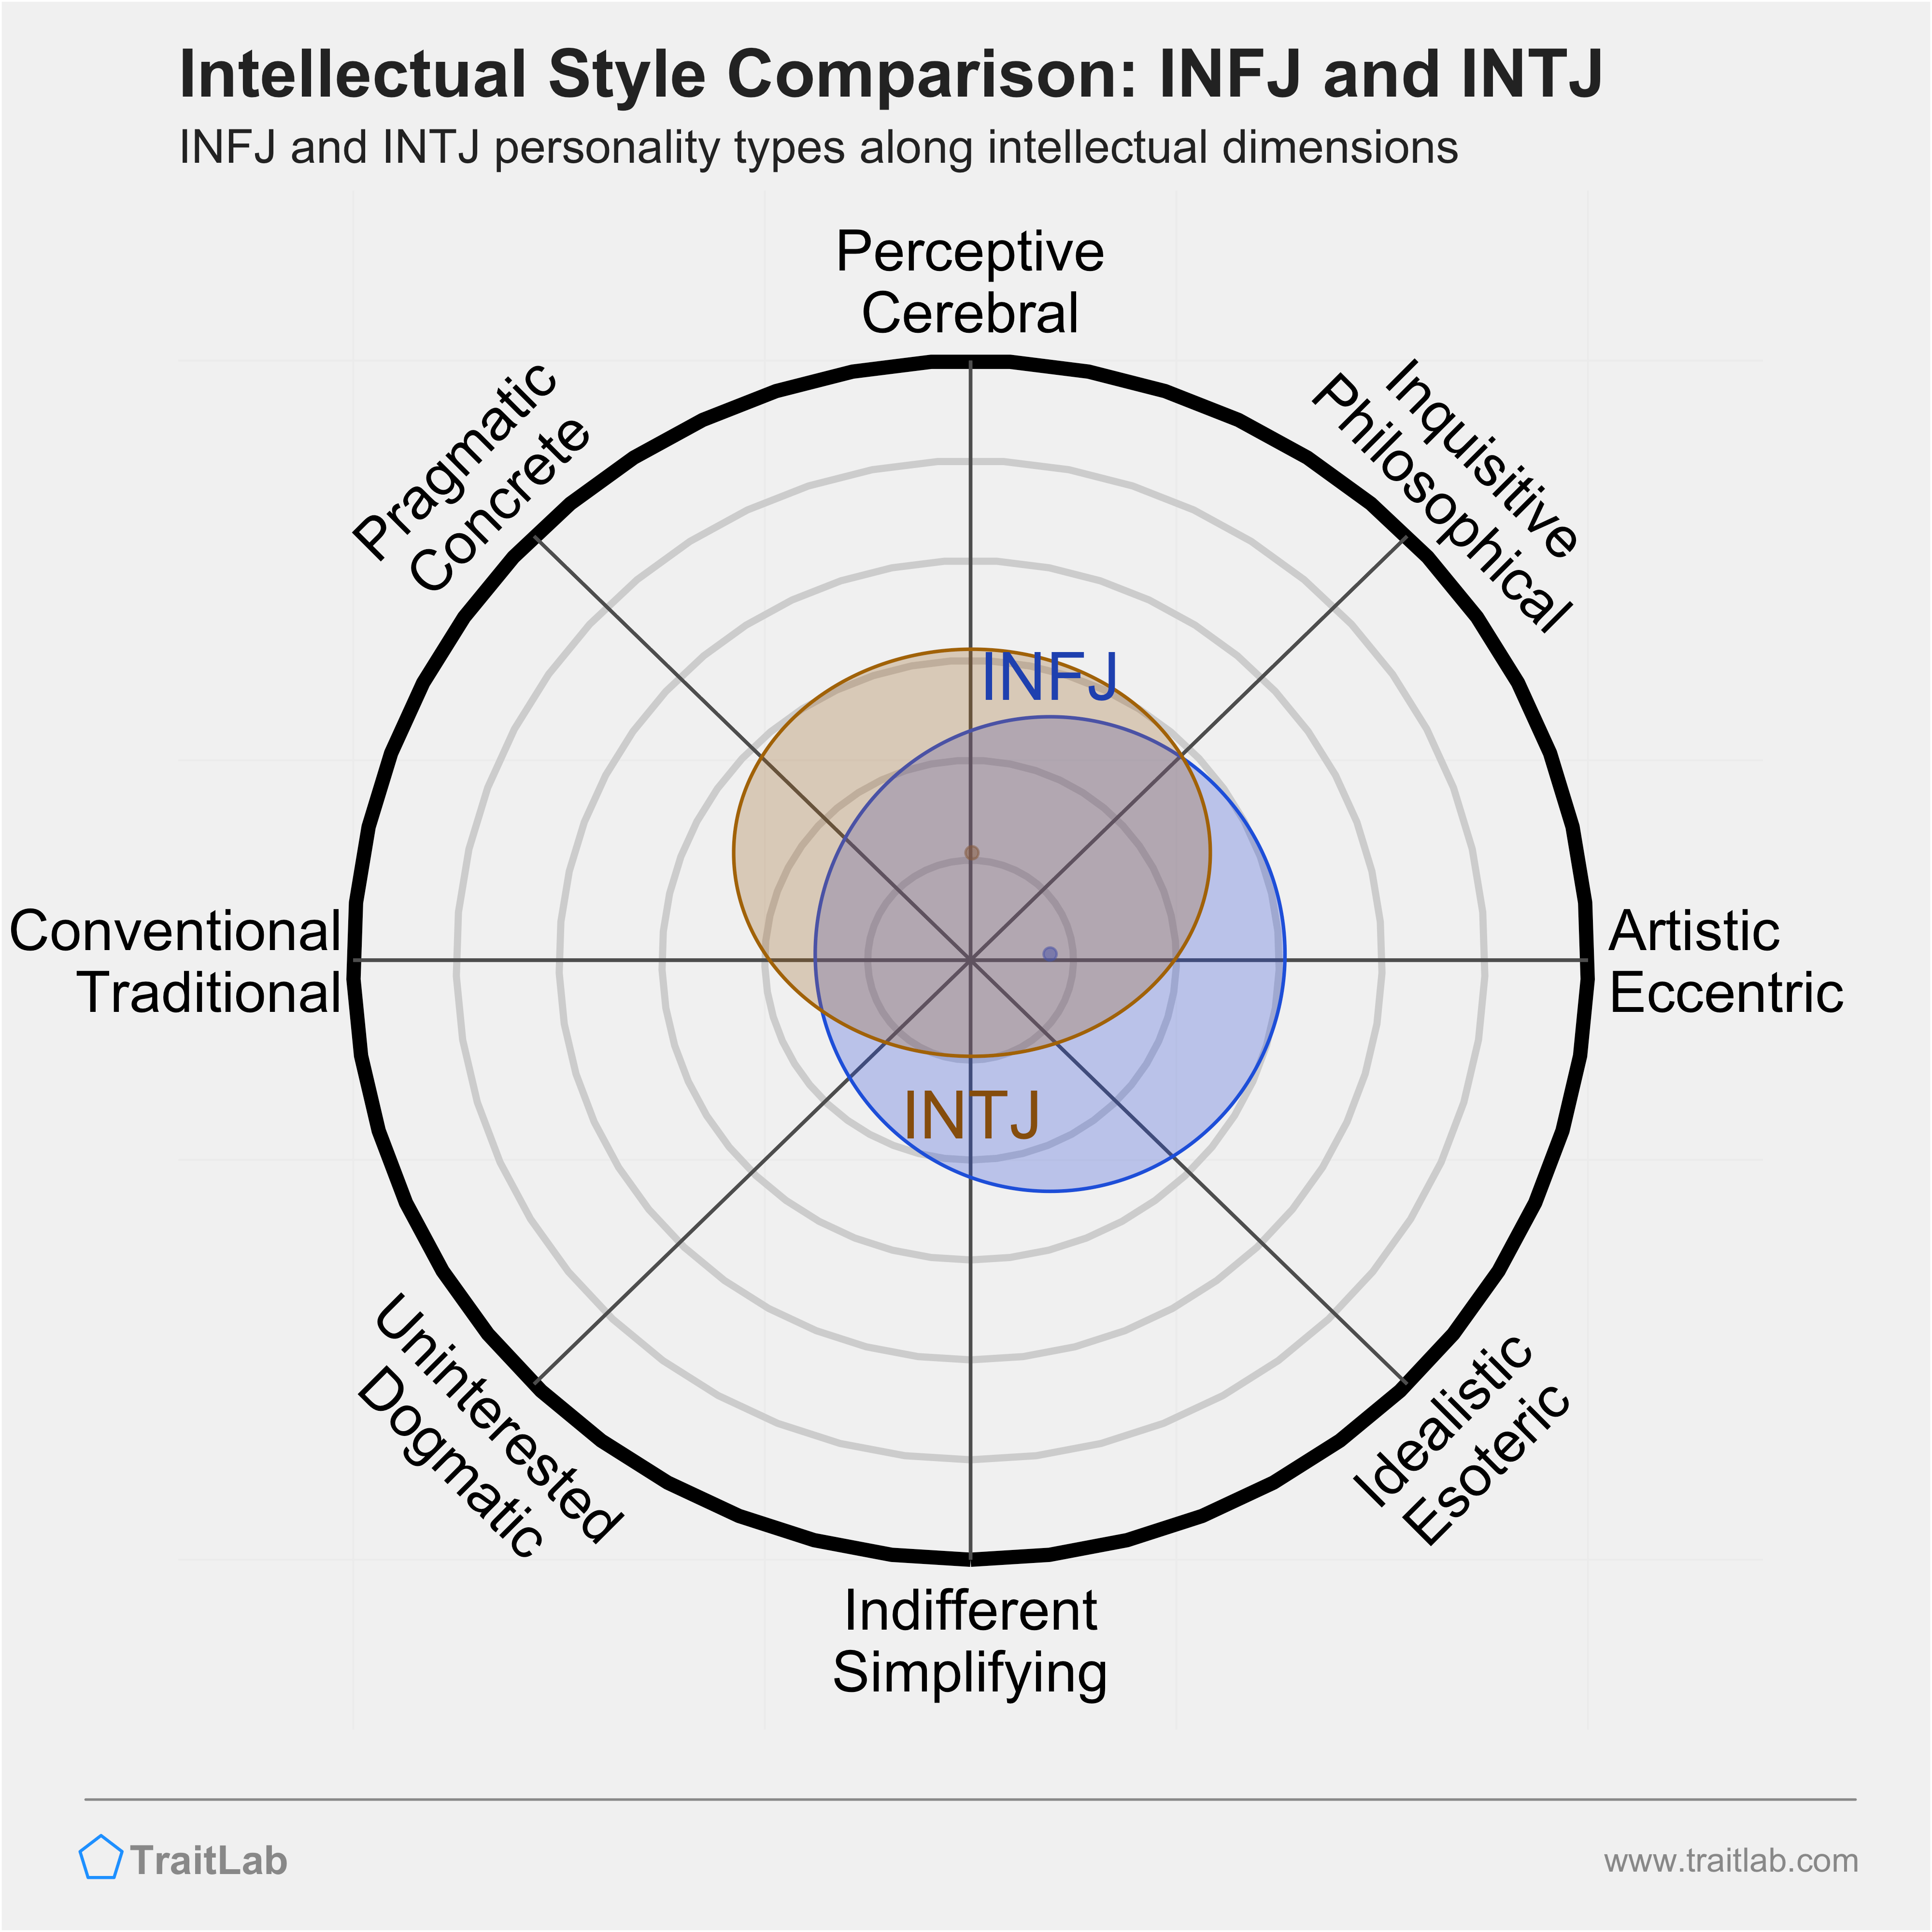 INFJ and INTJ comparison across intellectual dimensions